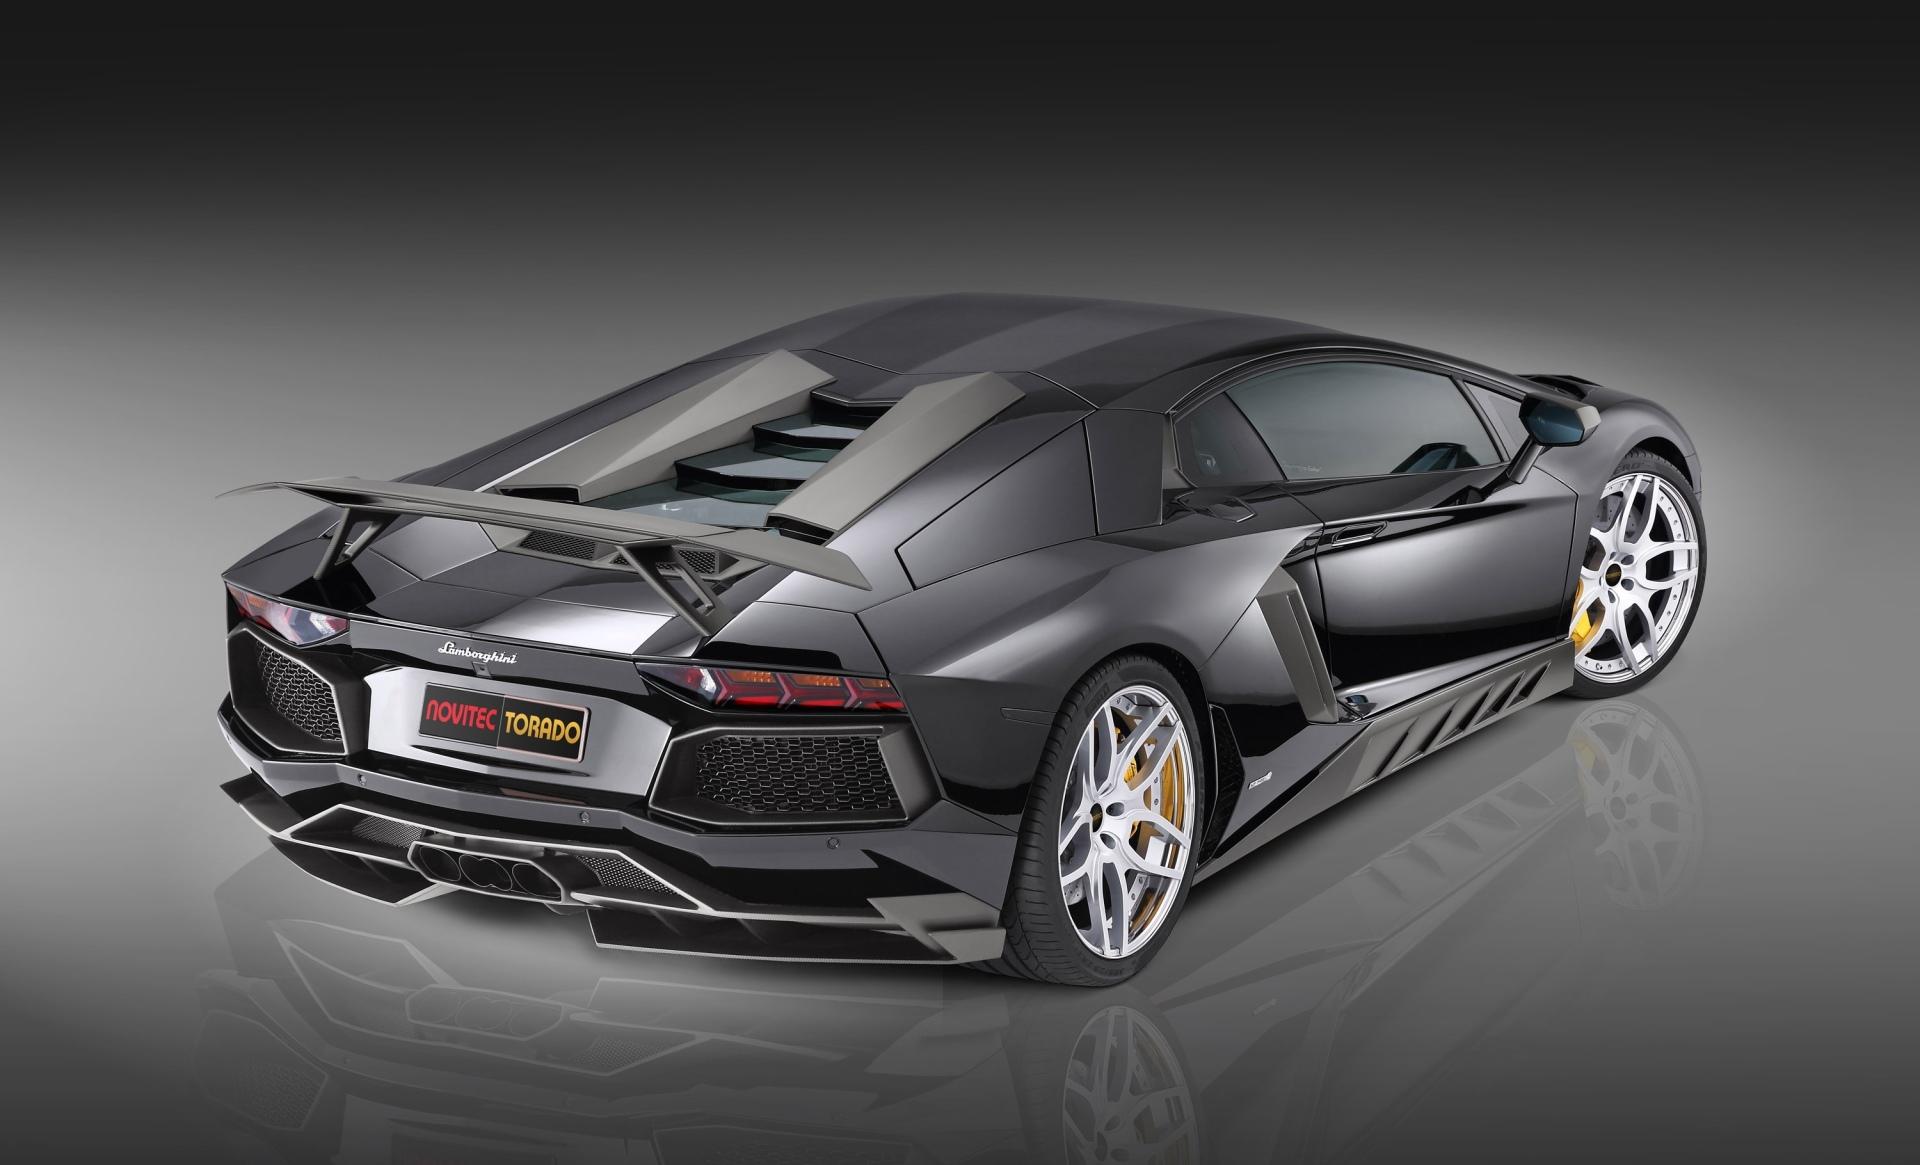 Lamborghini Novitec Torado at 1024 x 1024 iPad size wallpapers HD quality